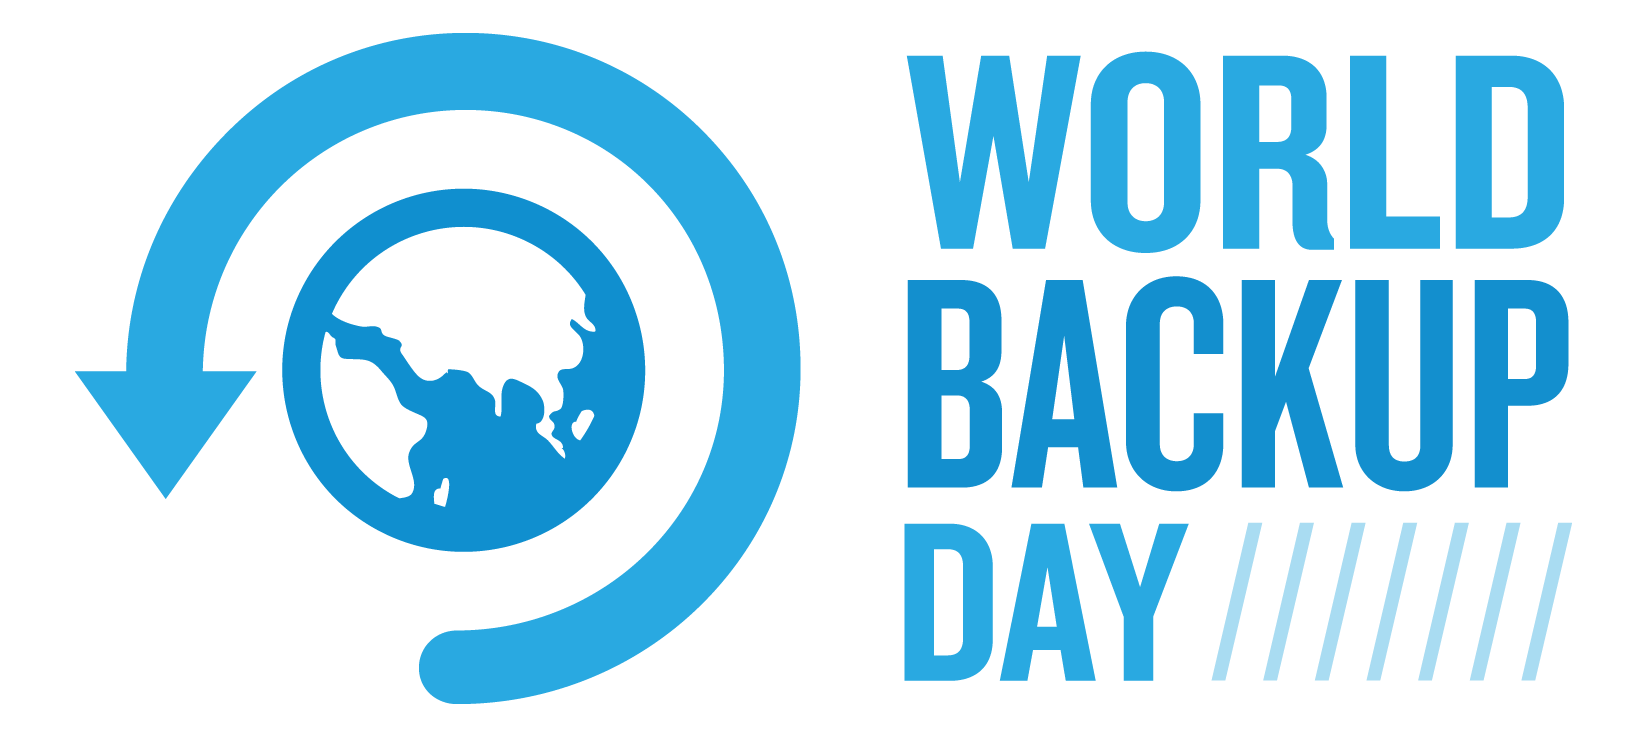 31.03.22 ist World Backup Day!